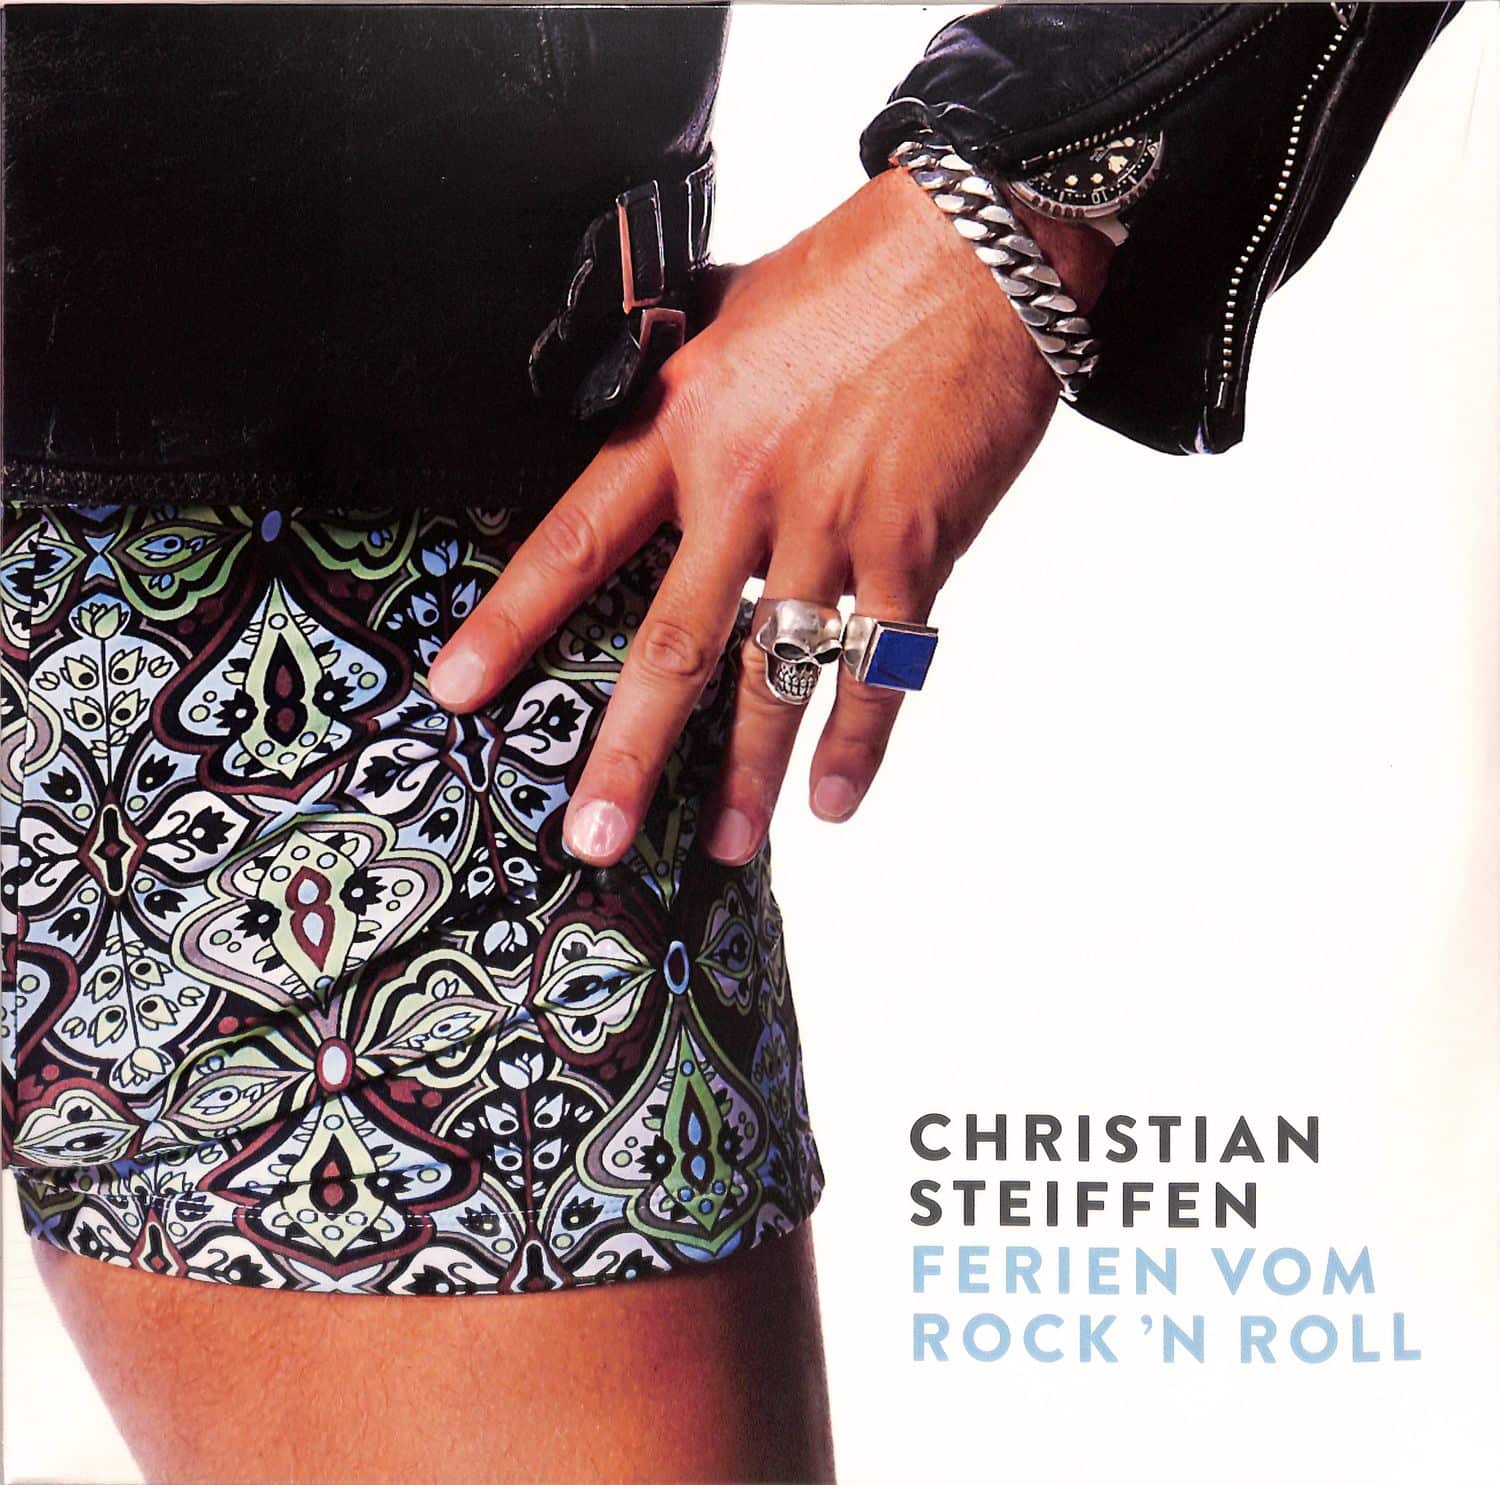 Christian Steiffen - FERIEN VOM ROCK N ROLL 